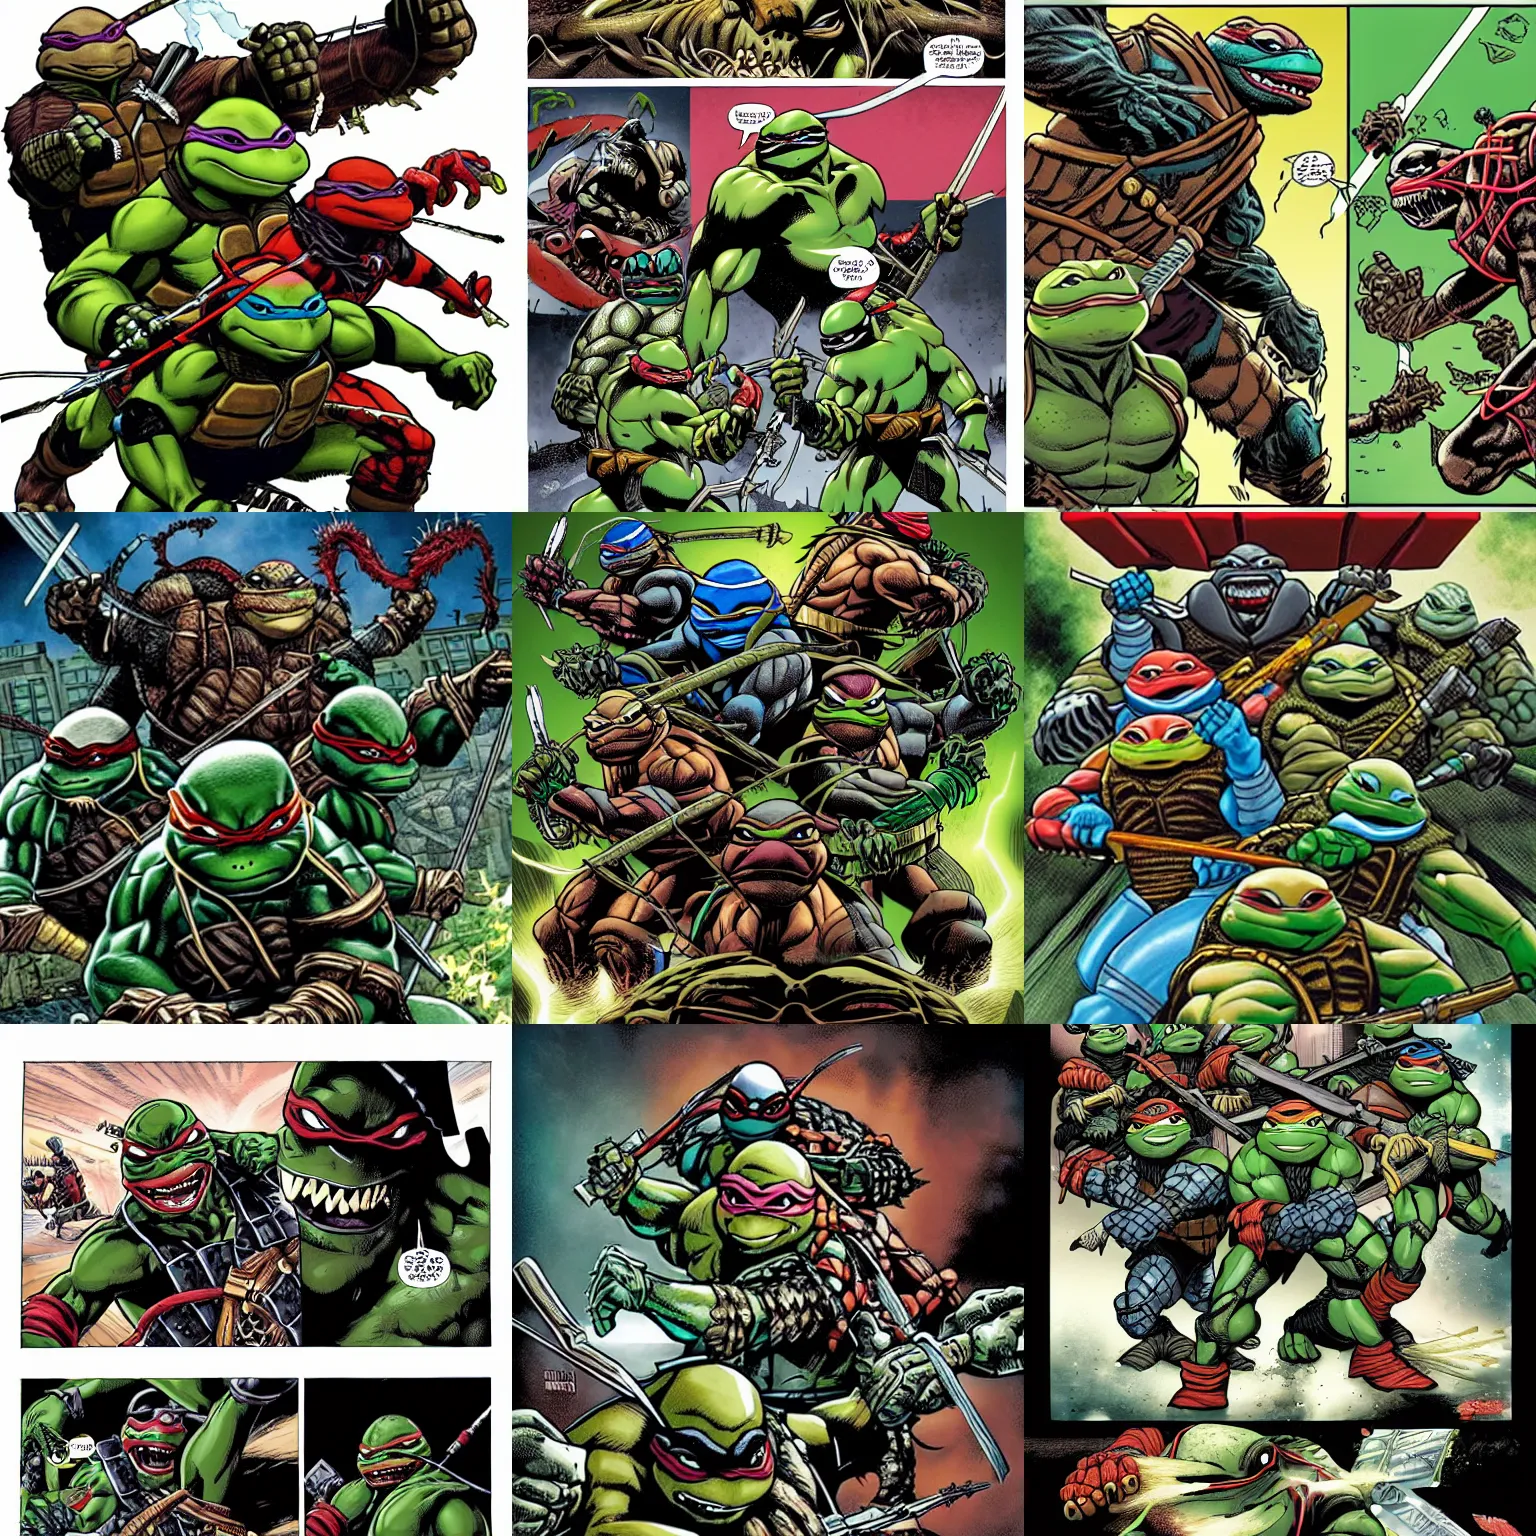 Prompt: the ninja turtles versus the predator